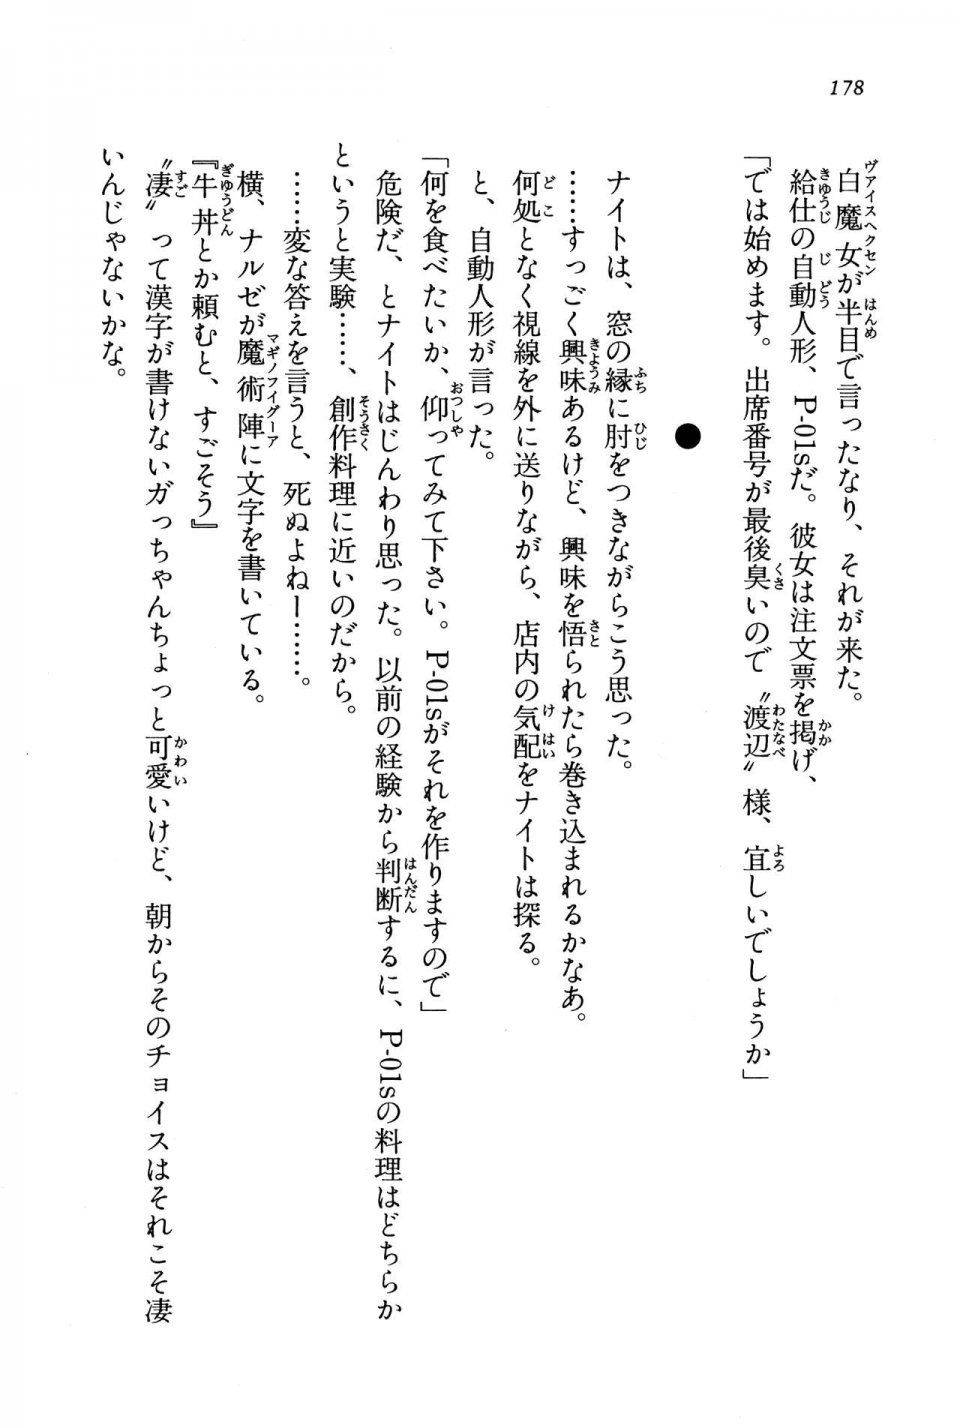 Kyoukai Senjou no Horizon BD Special Mininovel Vol 8(4B) - Photo #182